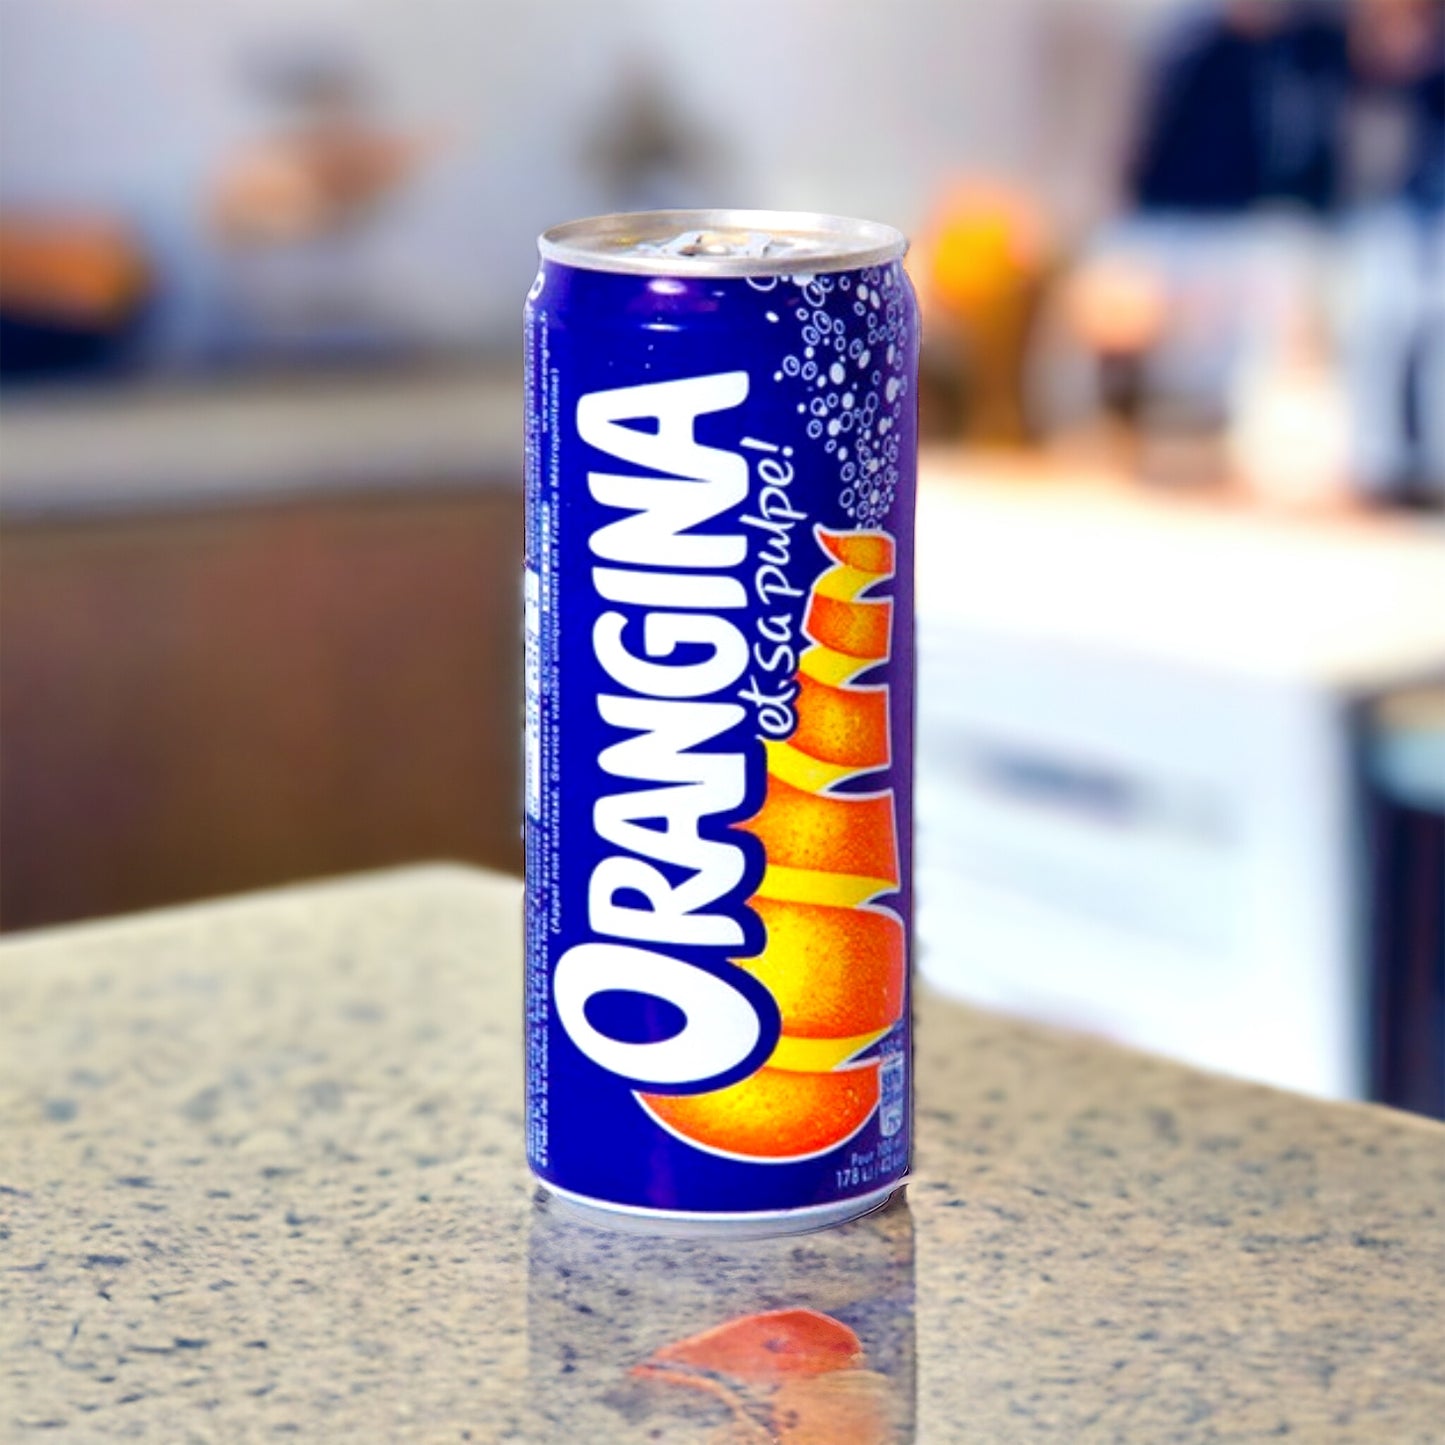 Orangina French Sparkling Orange Soda 11.16 oz (33cl)